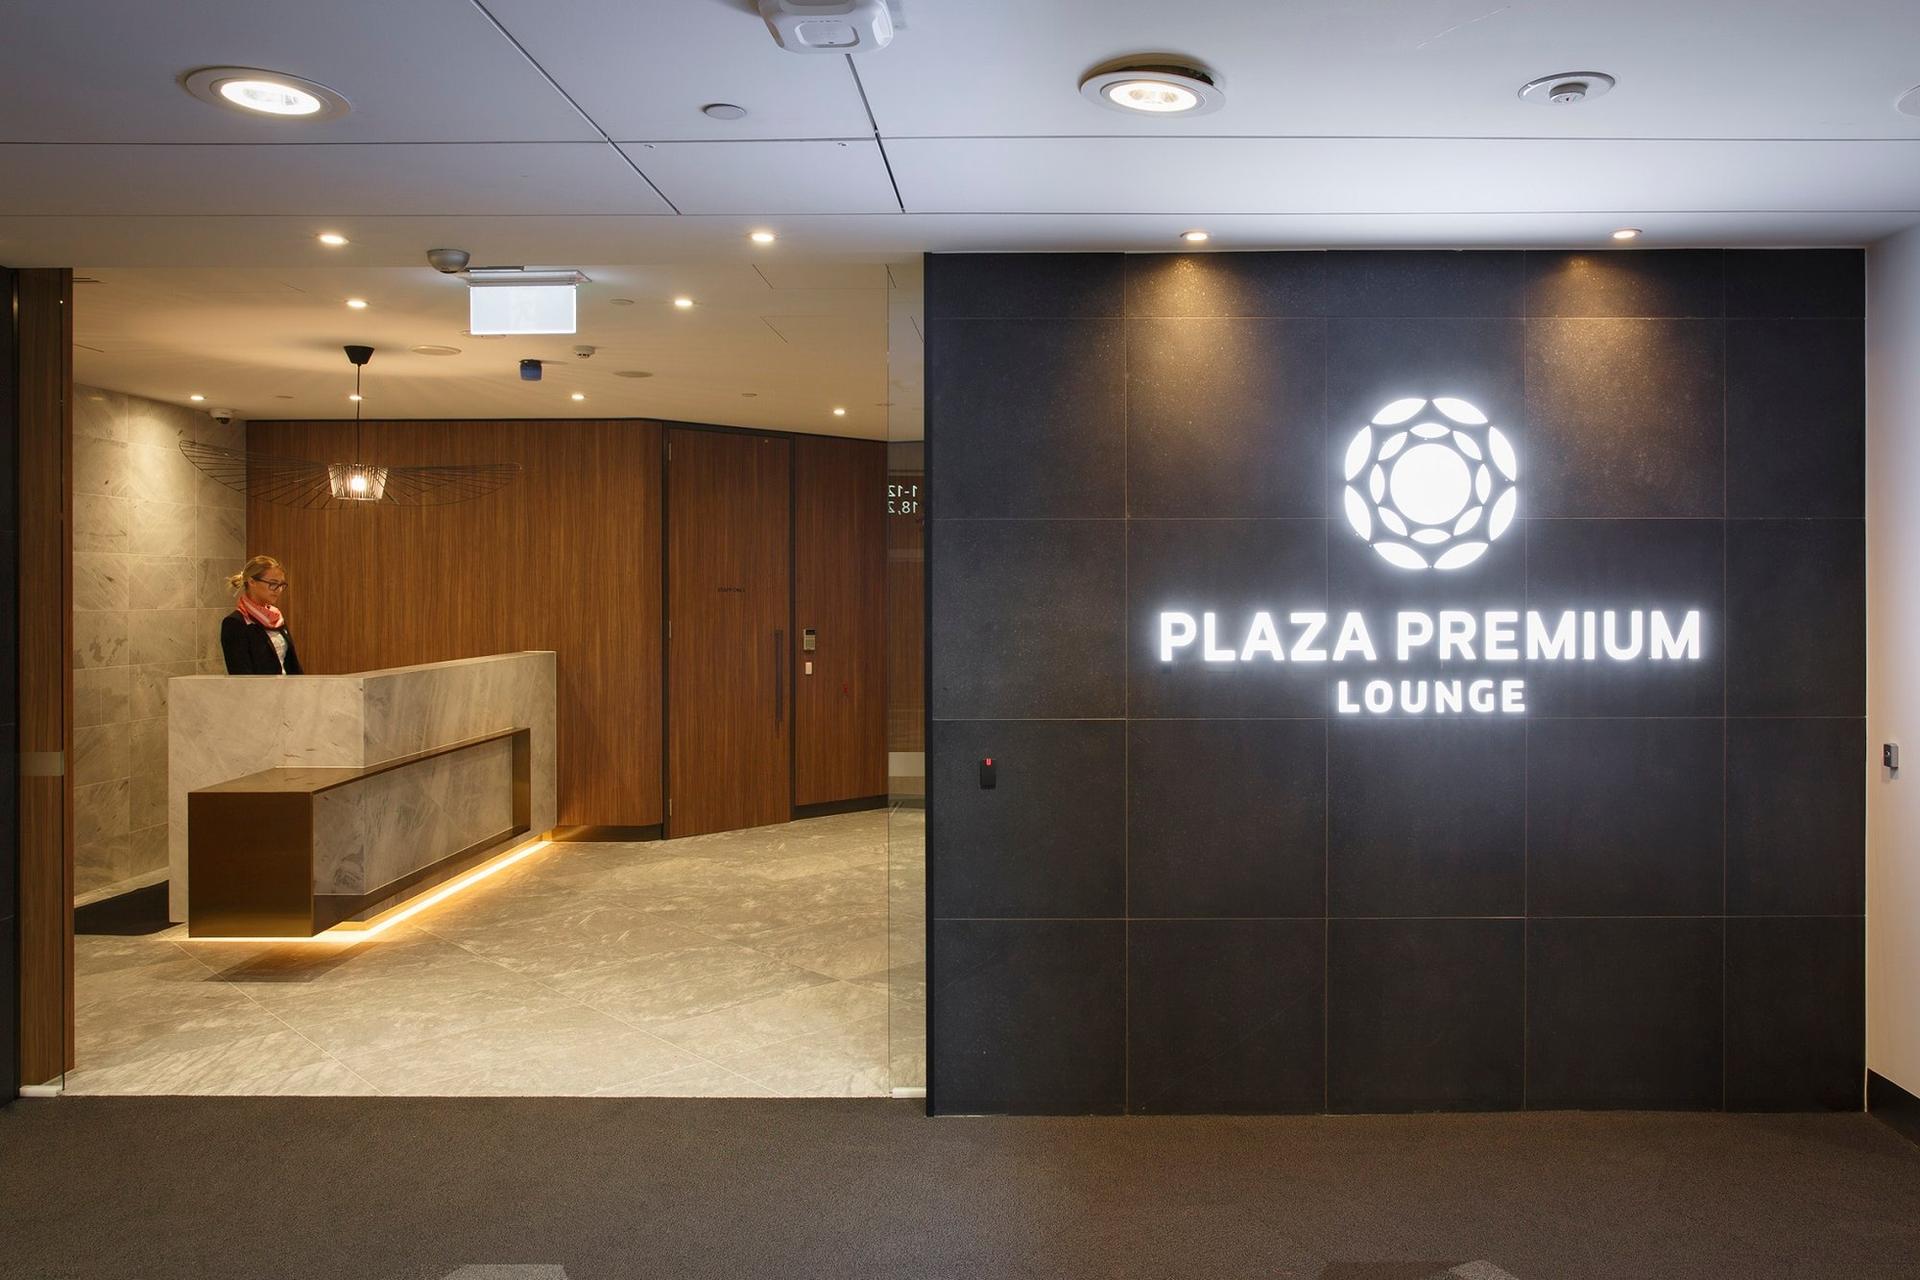 Plaza Premium Lounge image 26 of 33